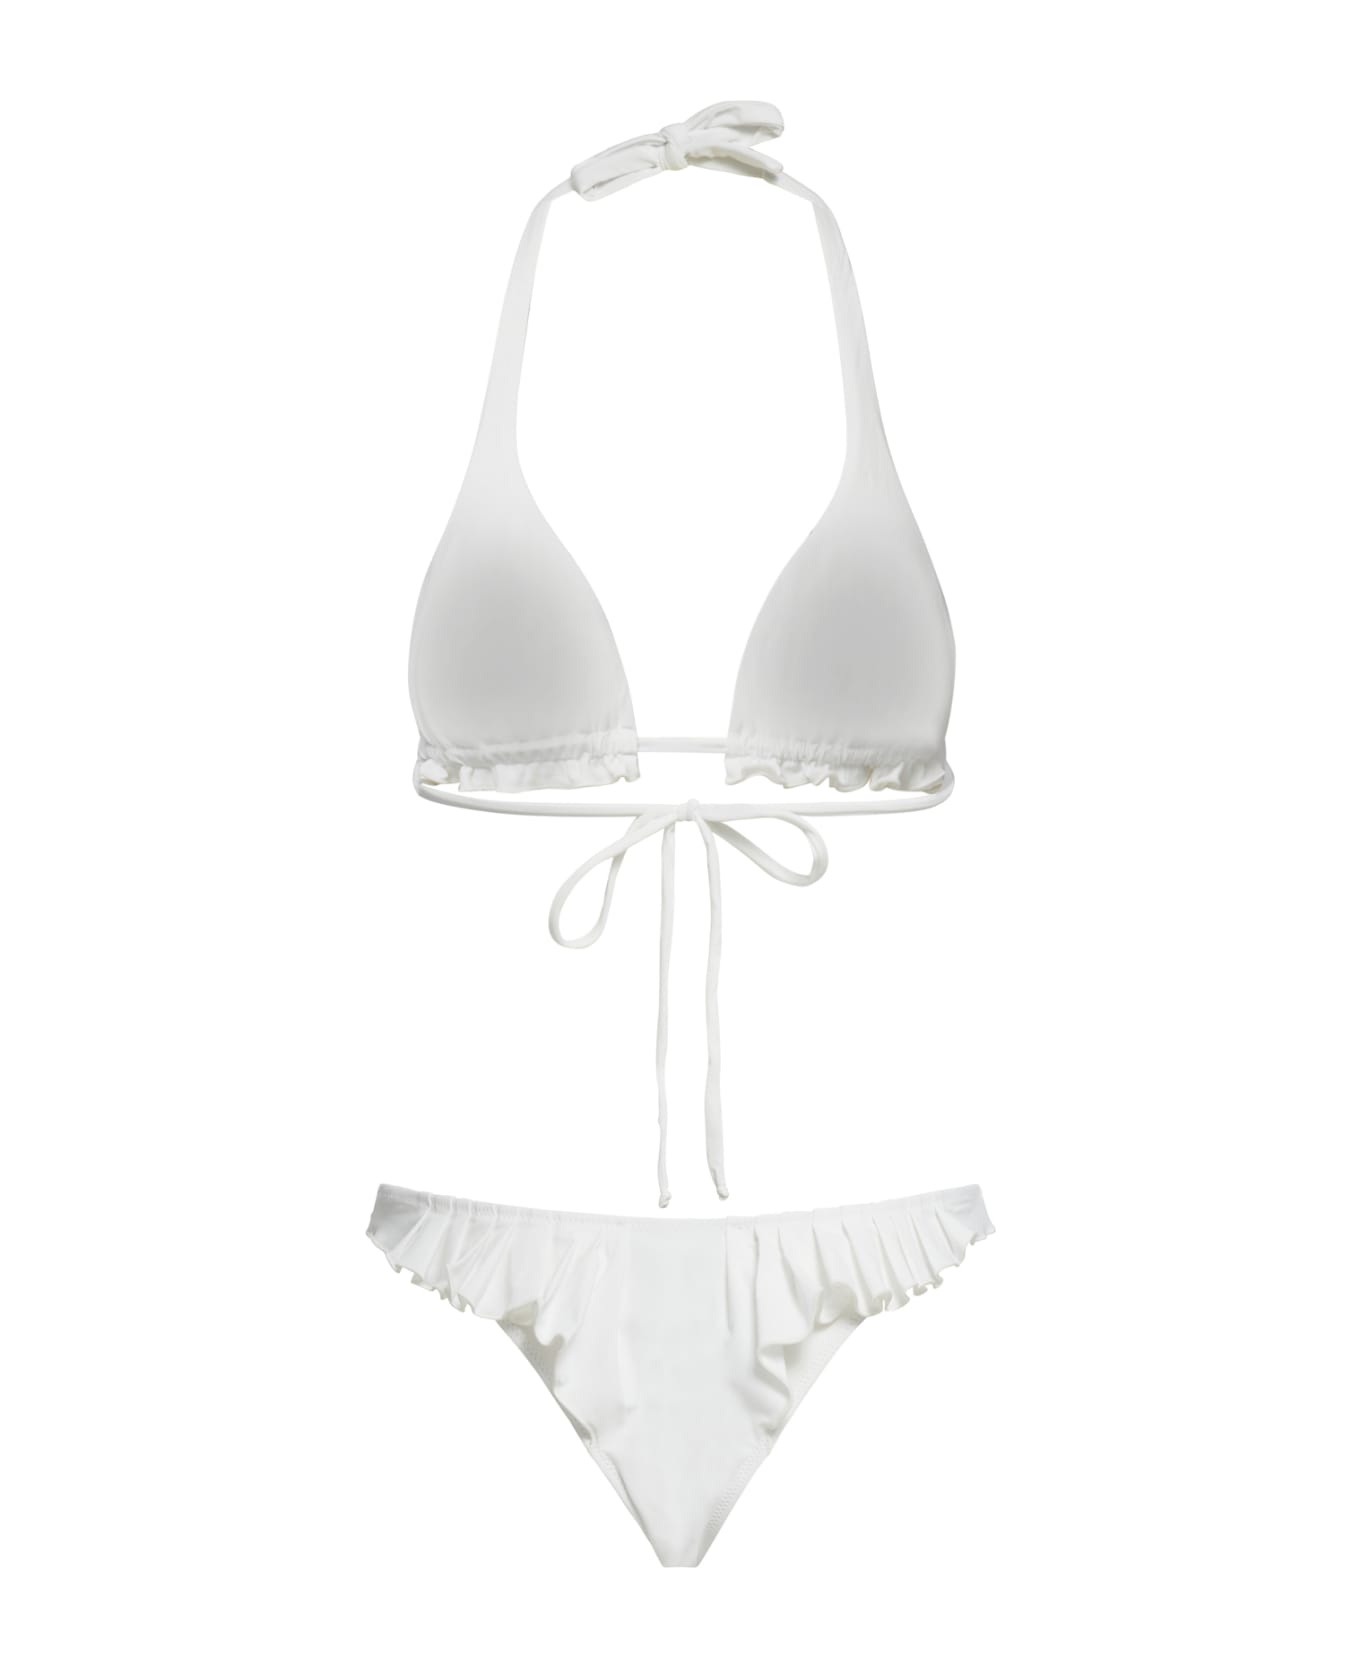 Sucrette Bikini - Bianco